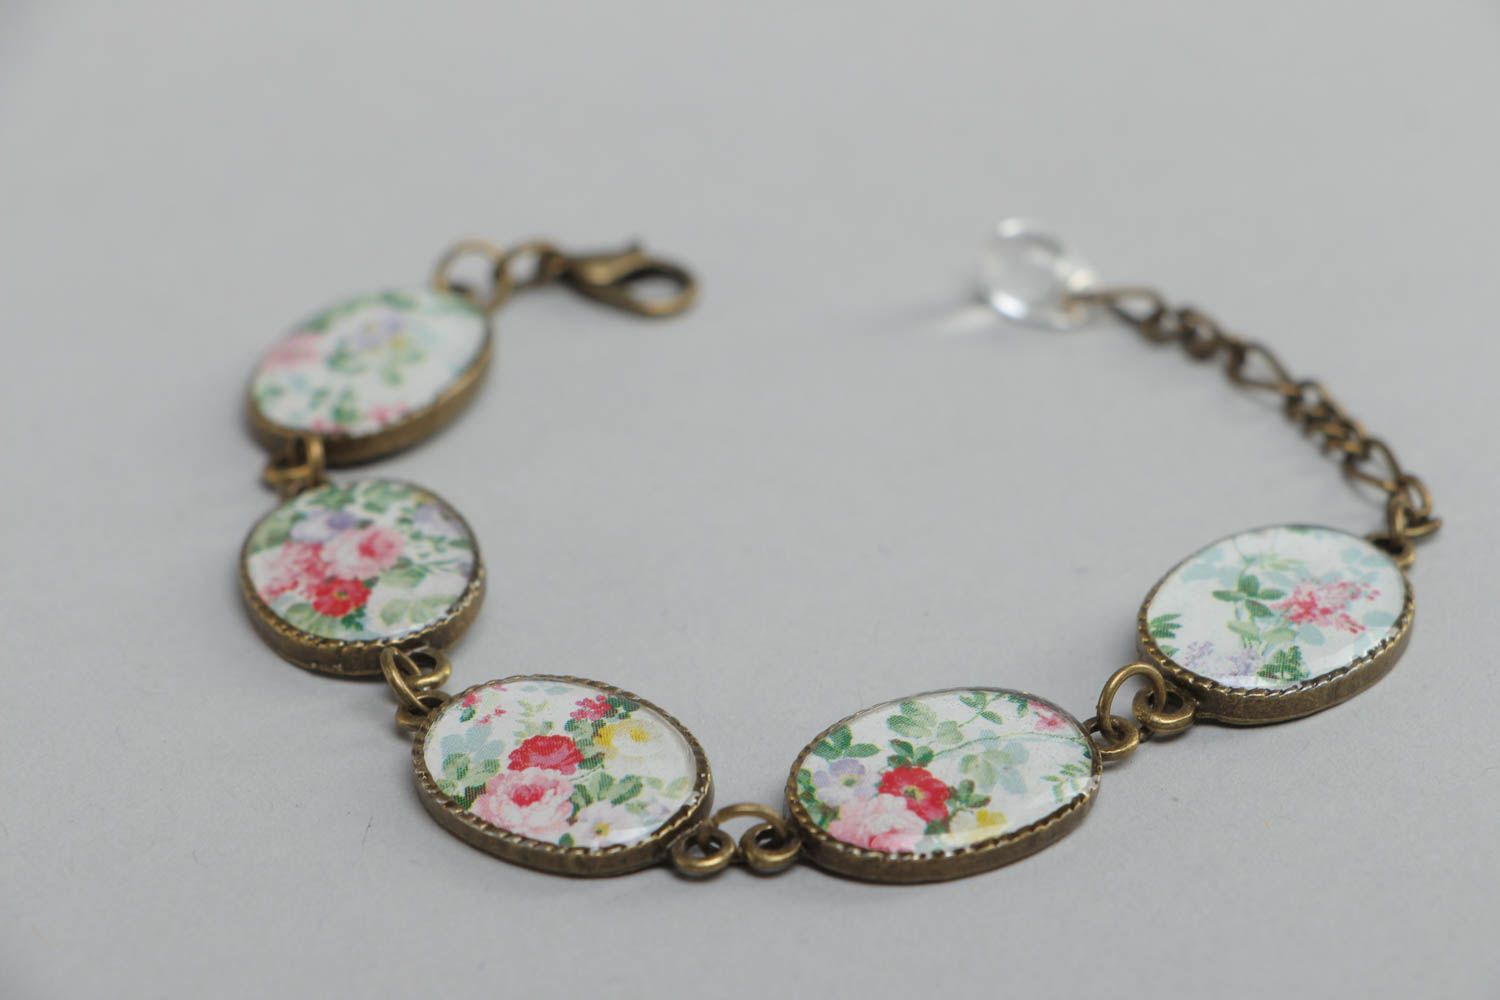 Handmade metal and glass glaze wrist bracelet with chain and flower pattern photo 3